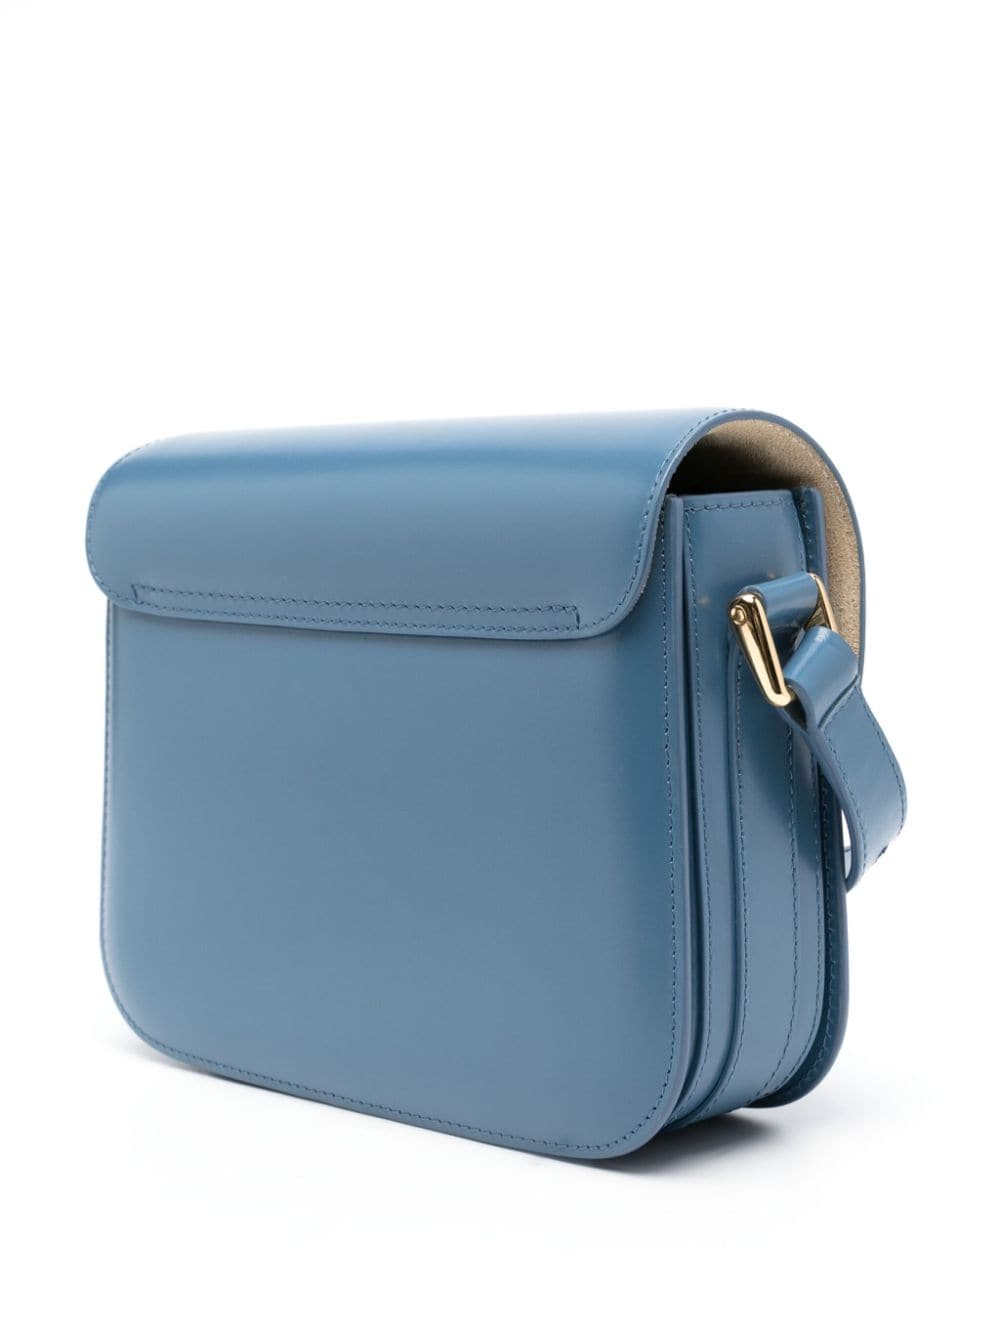 Ocean Blue Small Grace Shoulder Handbag for Women